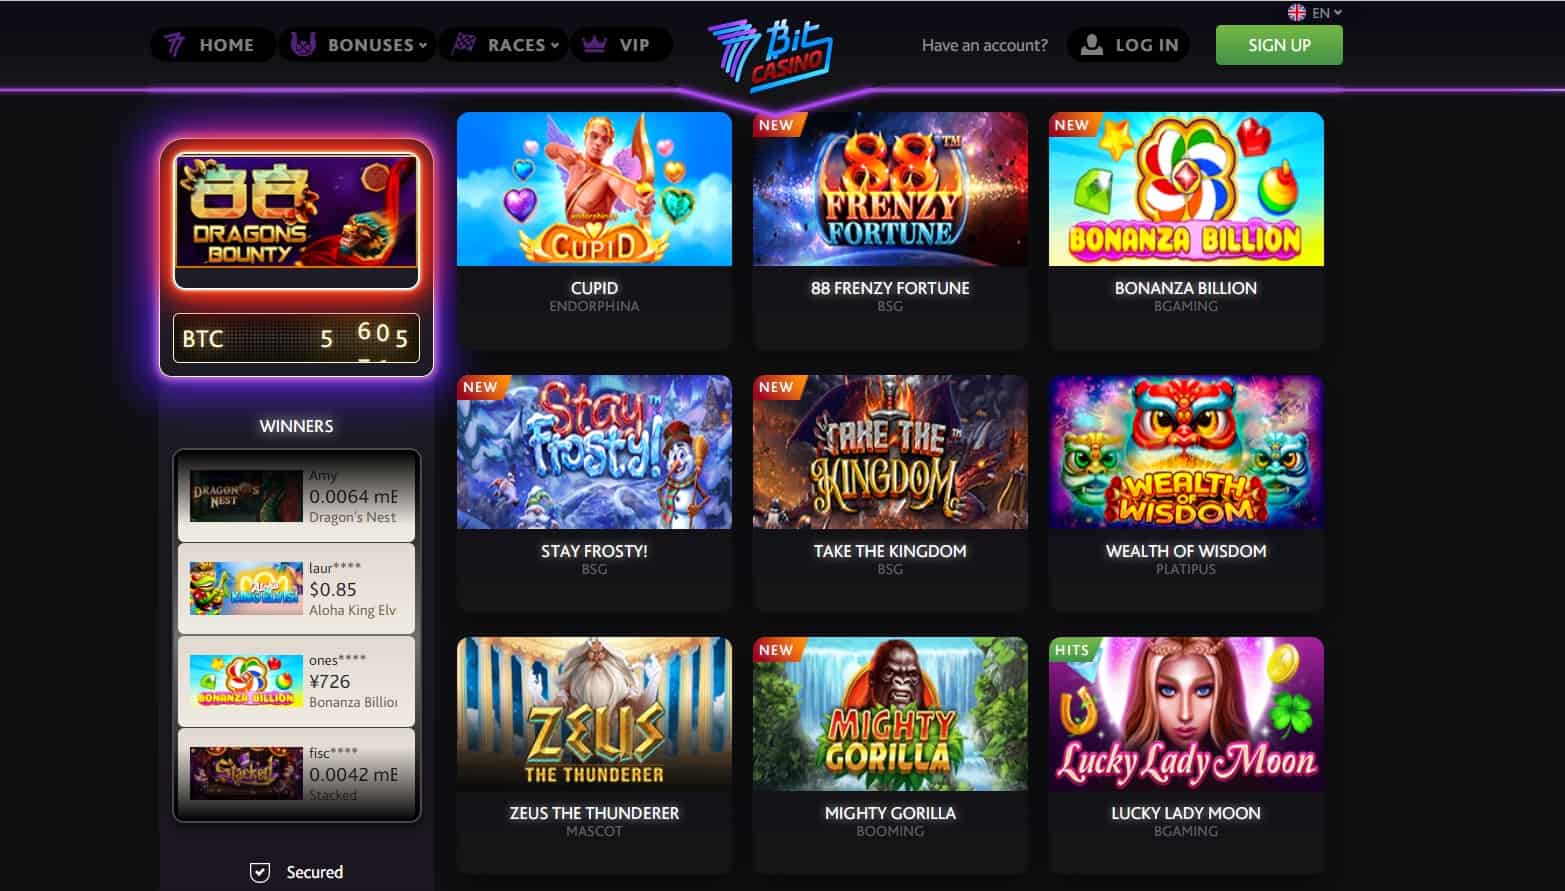 7bit Casino Games